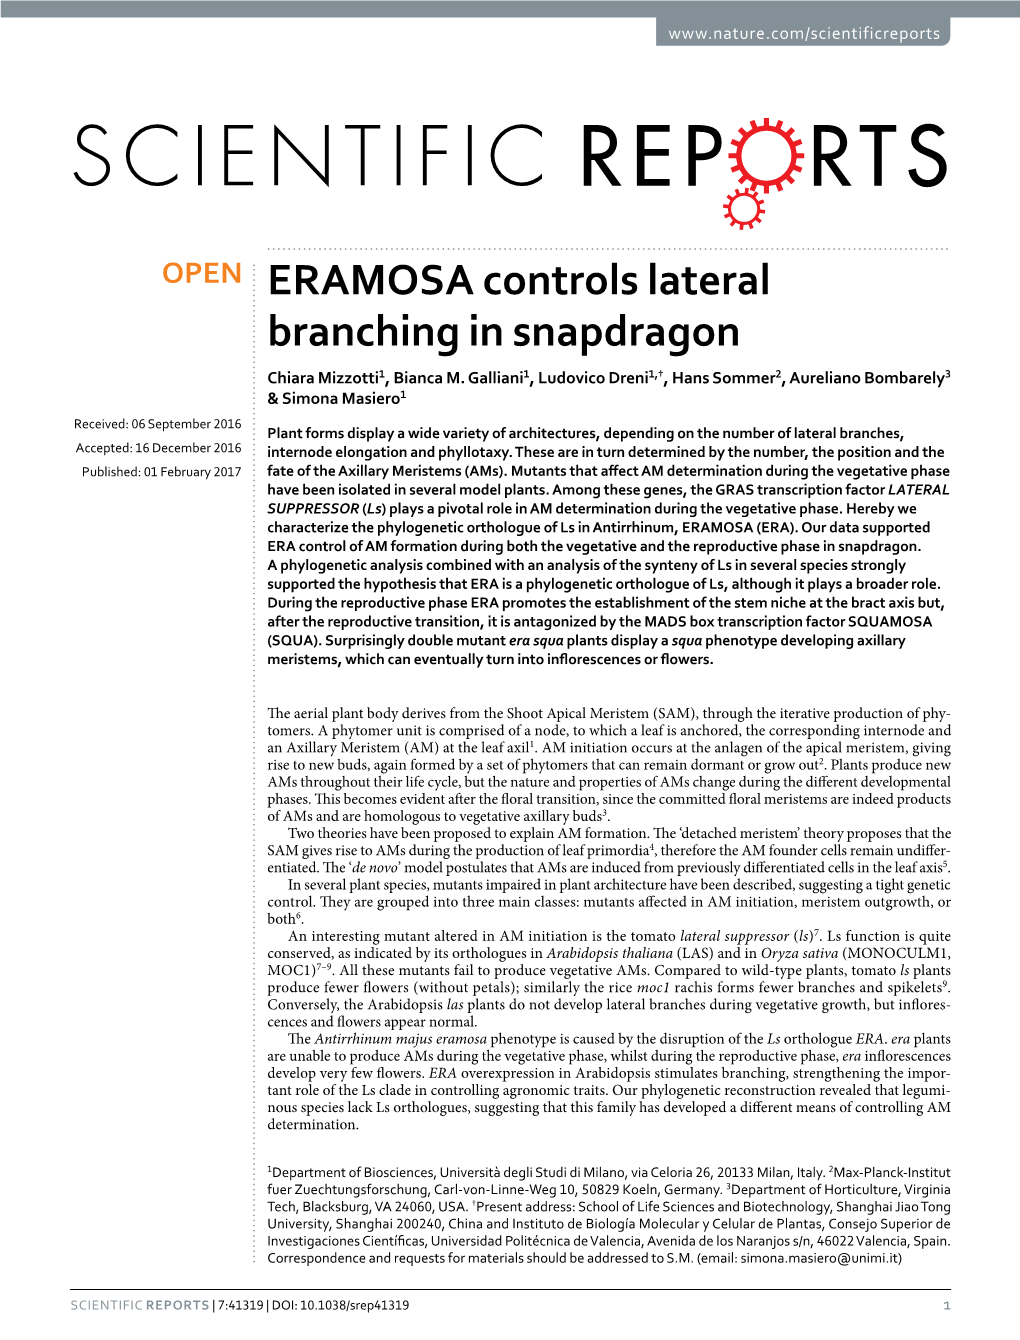 ERAMOSA Controls Lateral Branching in Snapdragon Chiara Mizzotti1, Bianca M